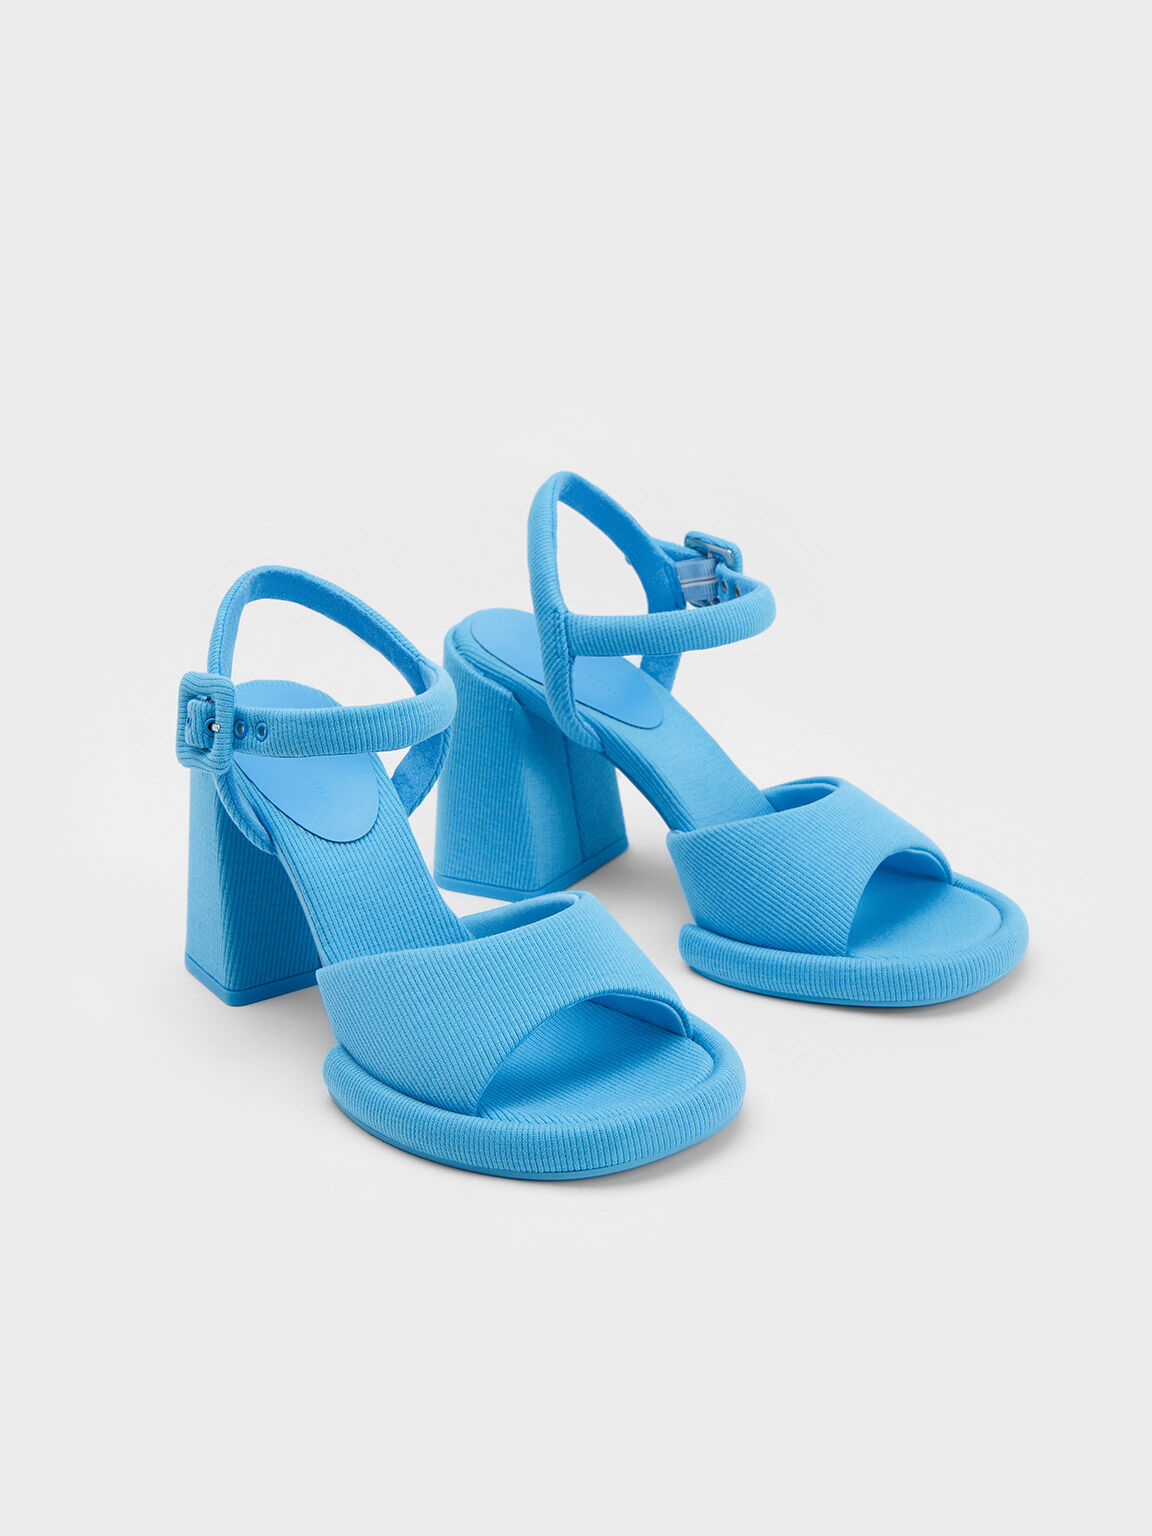 Giày sandals cao gót đế trụ Woven Trapeze, Xanh blue, hi-res